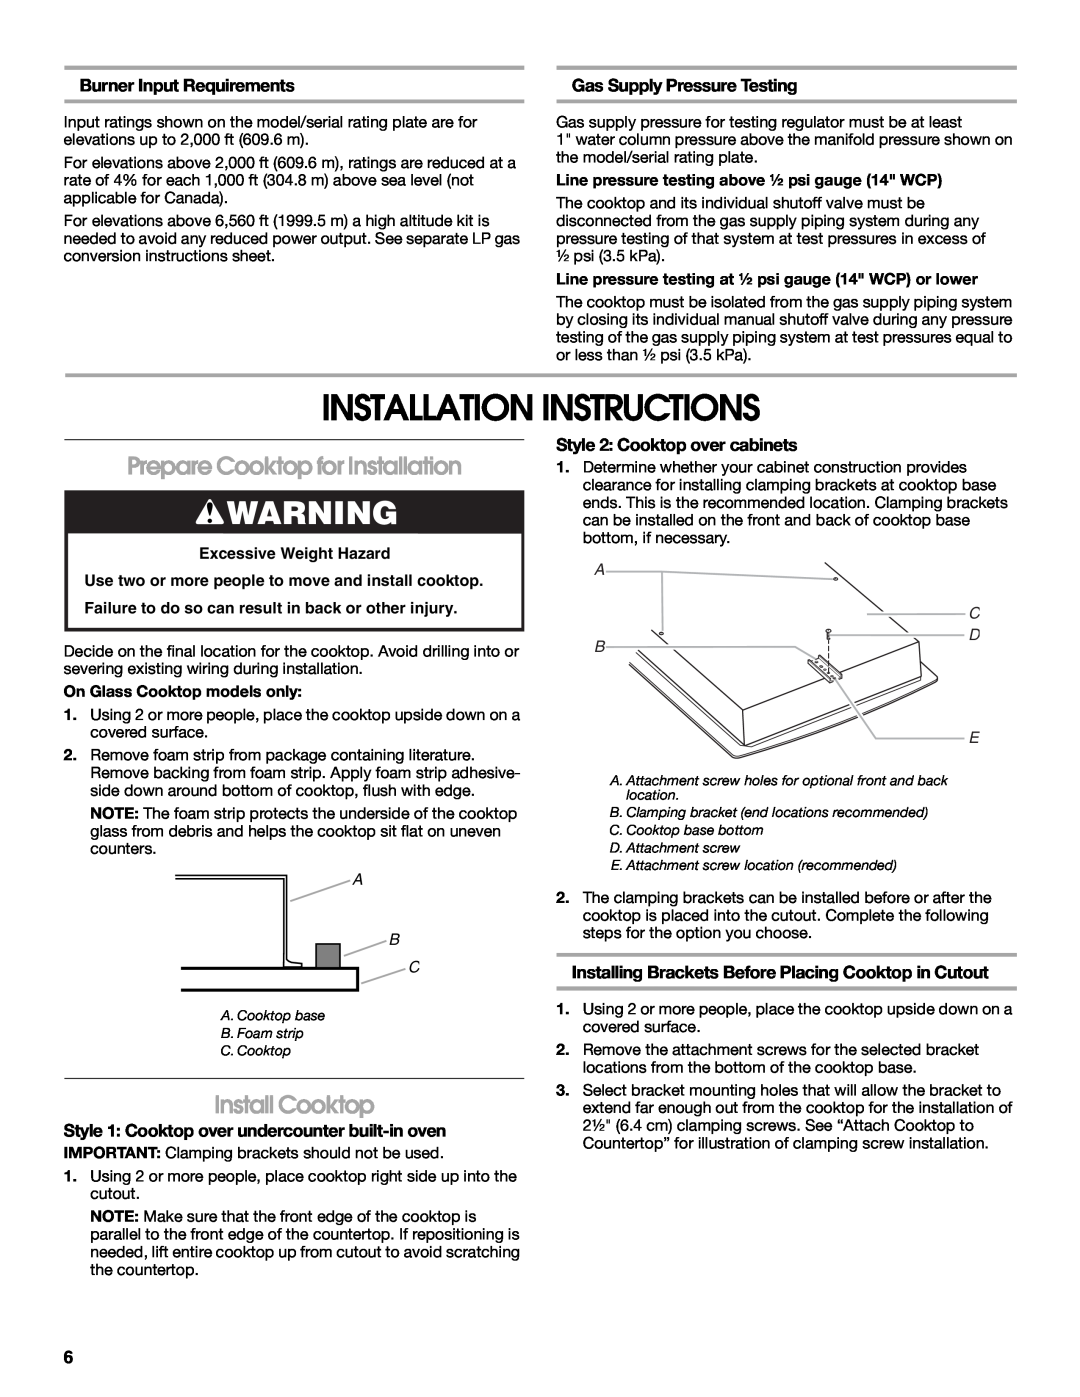 Whirlpool W10131955B Installation Instructions, Prepare Cooktop for Installation, Install Cooktop, Excessive Weight Hazard 